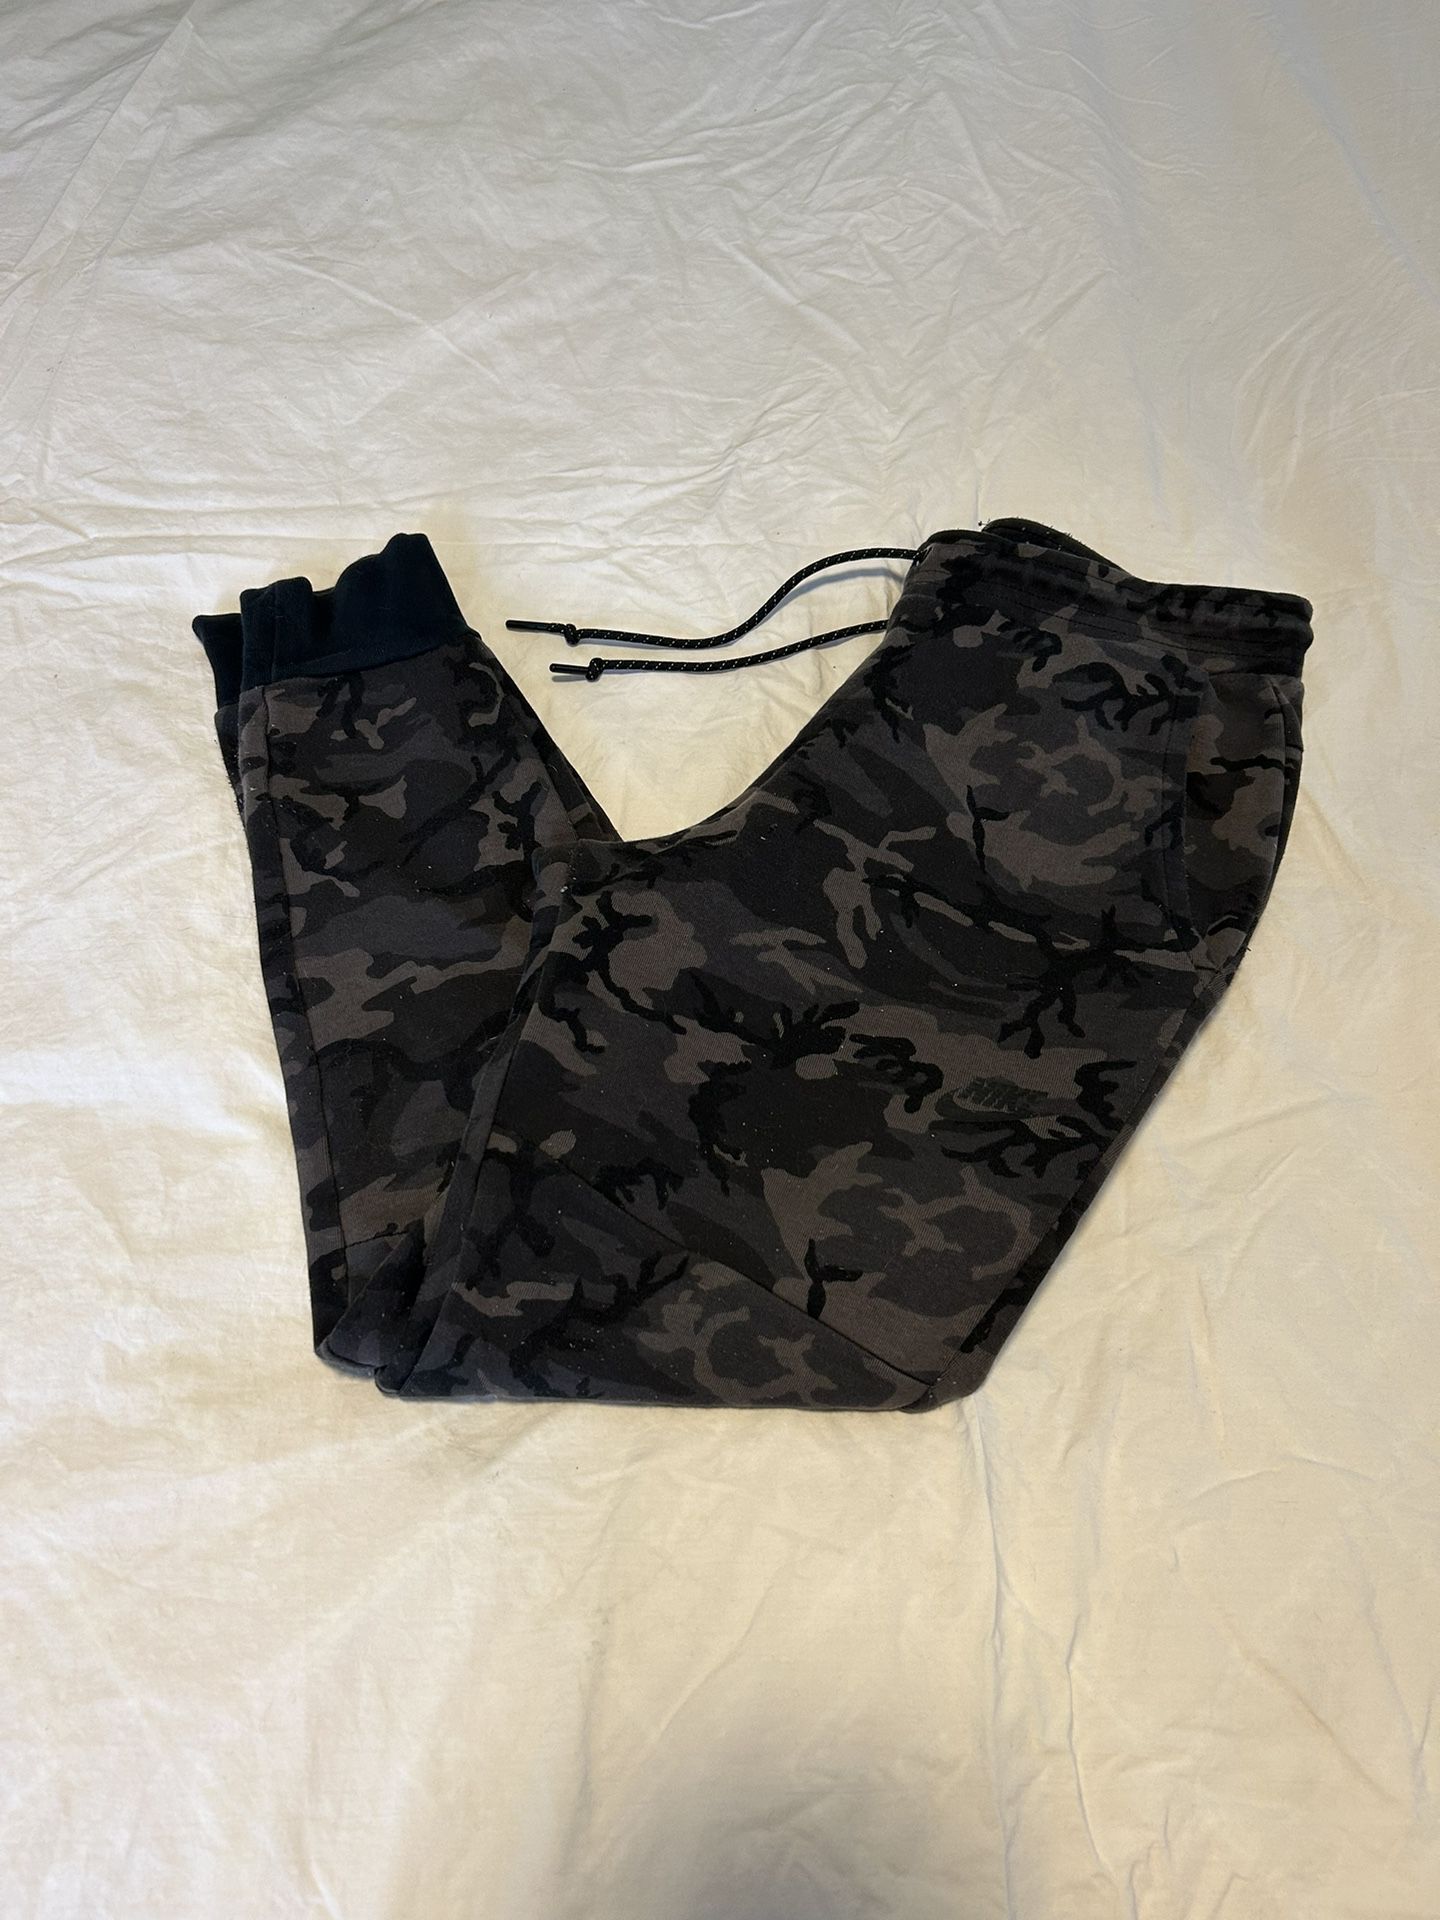 Nike Men’s s camo camouflage black gray sweatpants active jogger pockets string